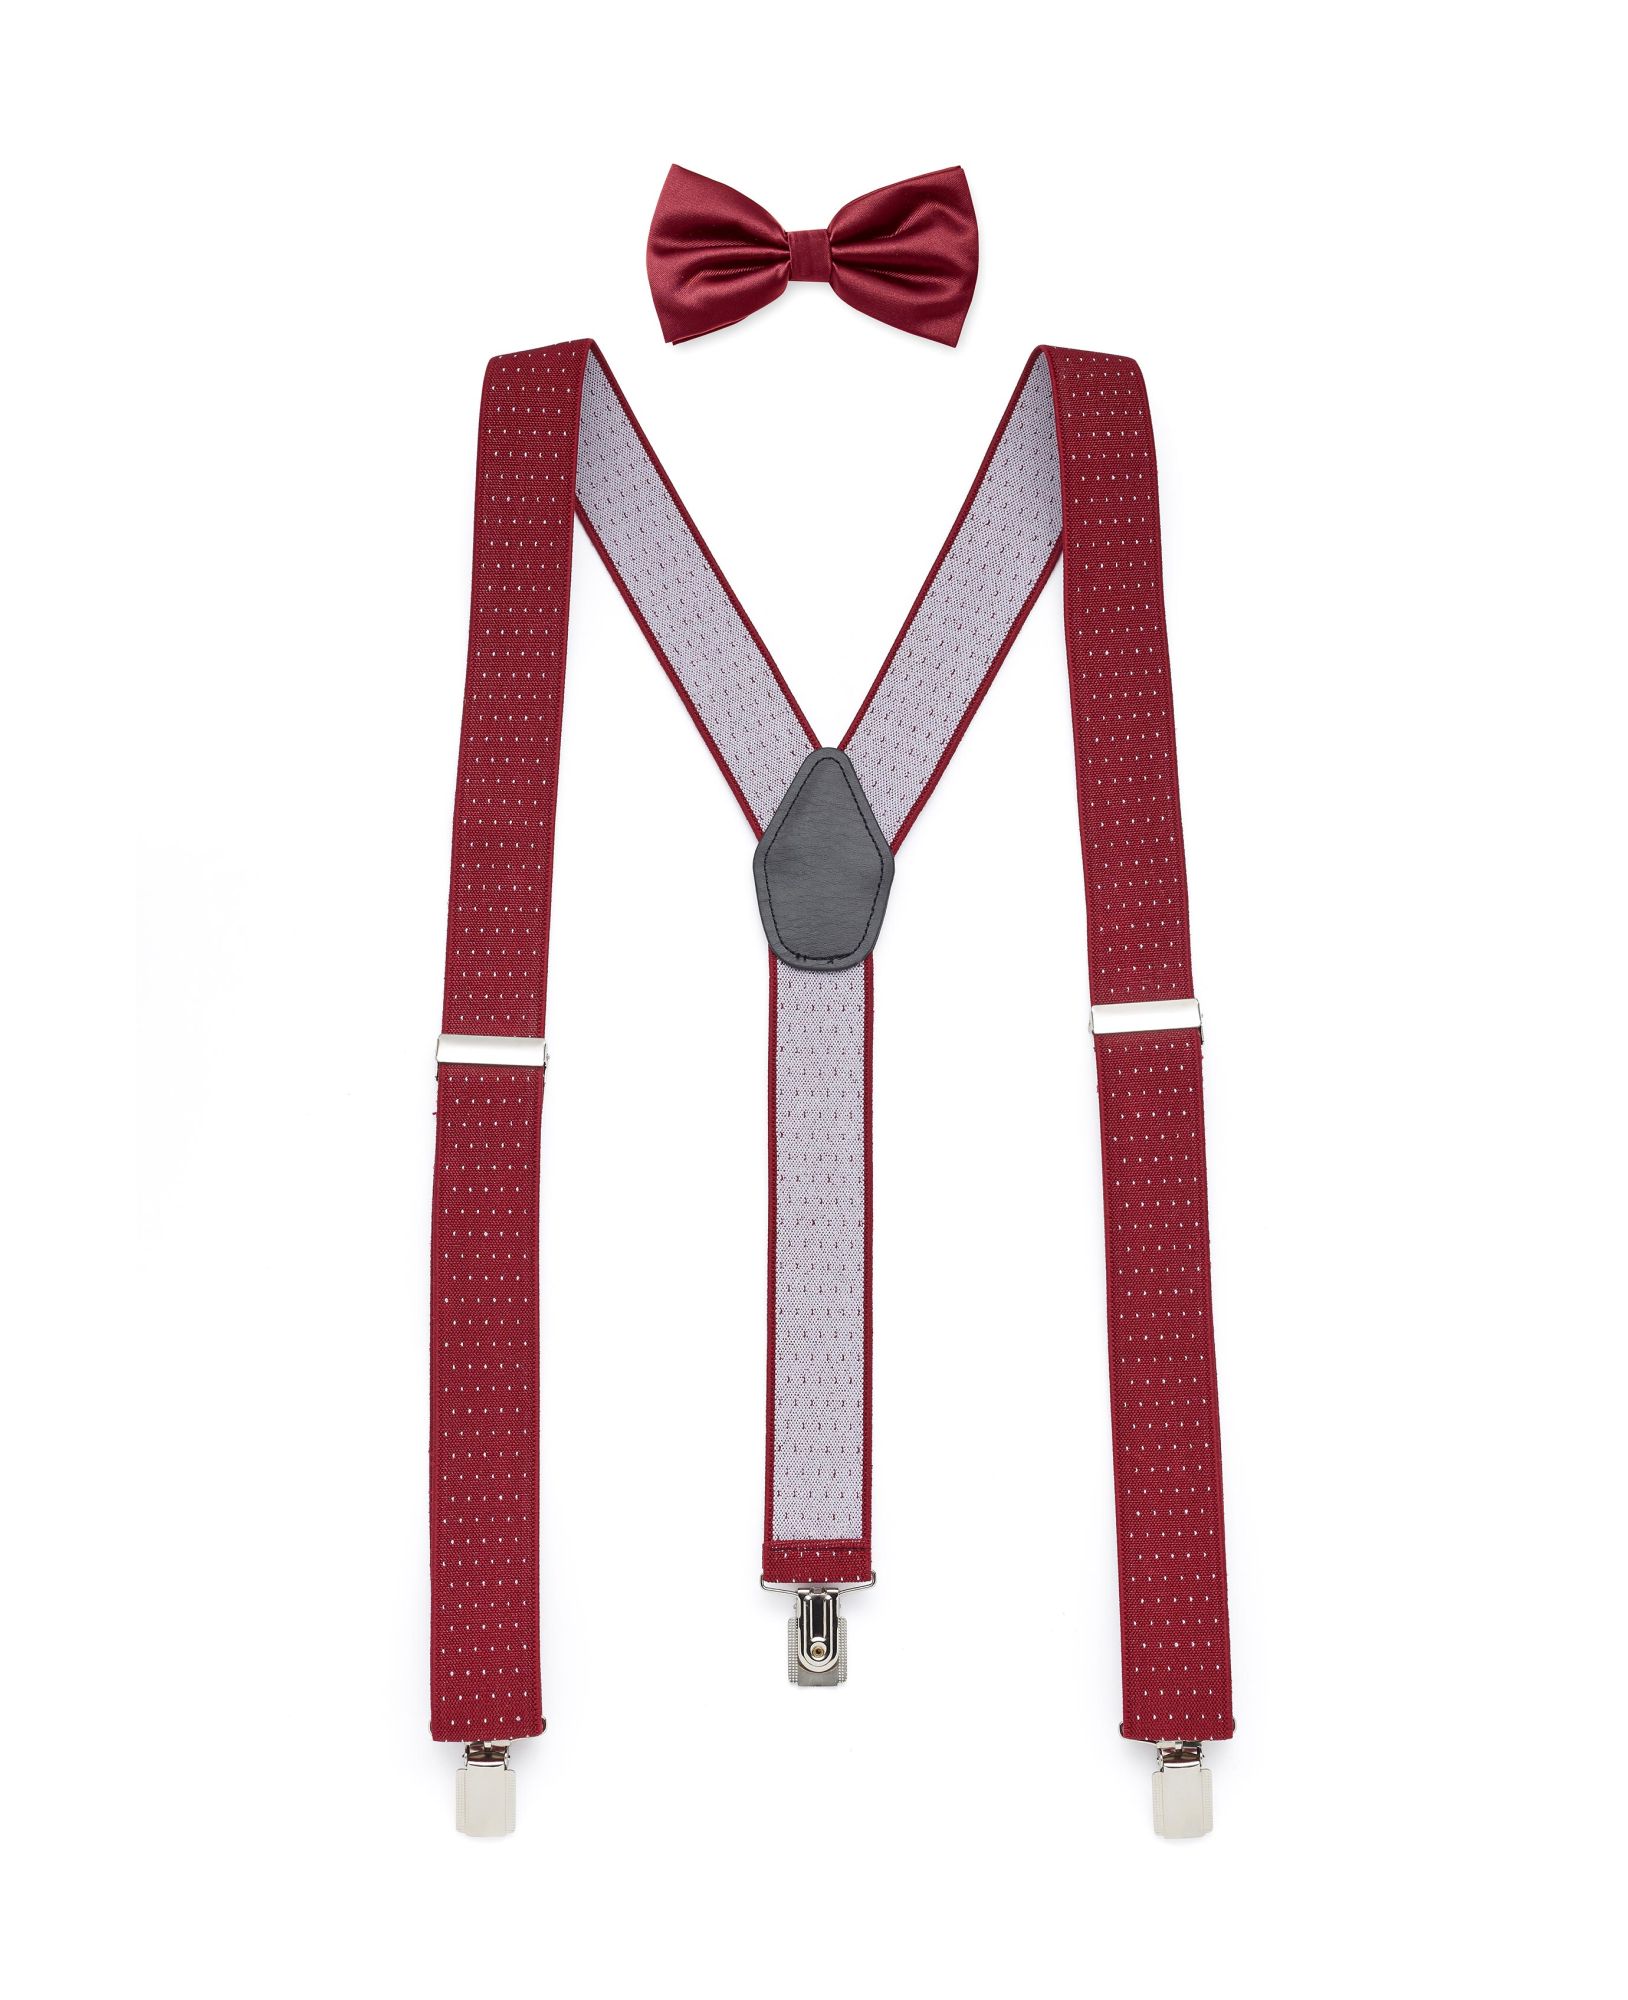 Burgundy Spotted Braces & Bow Tie Set by Savile Row Company